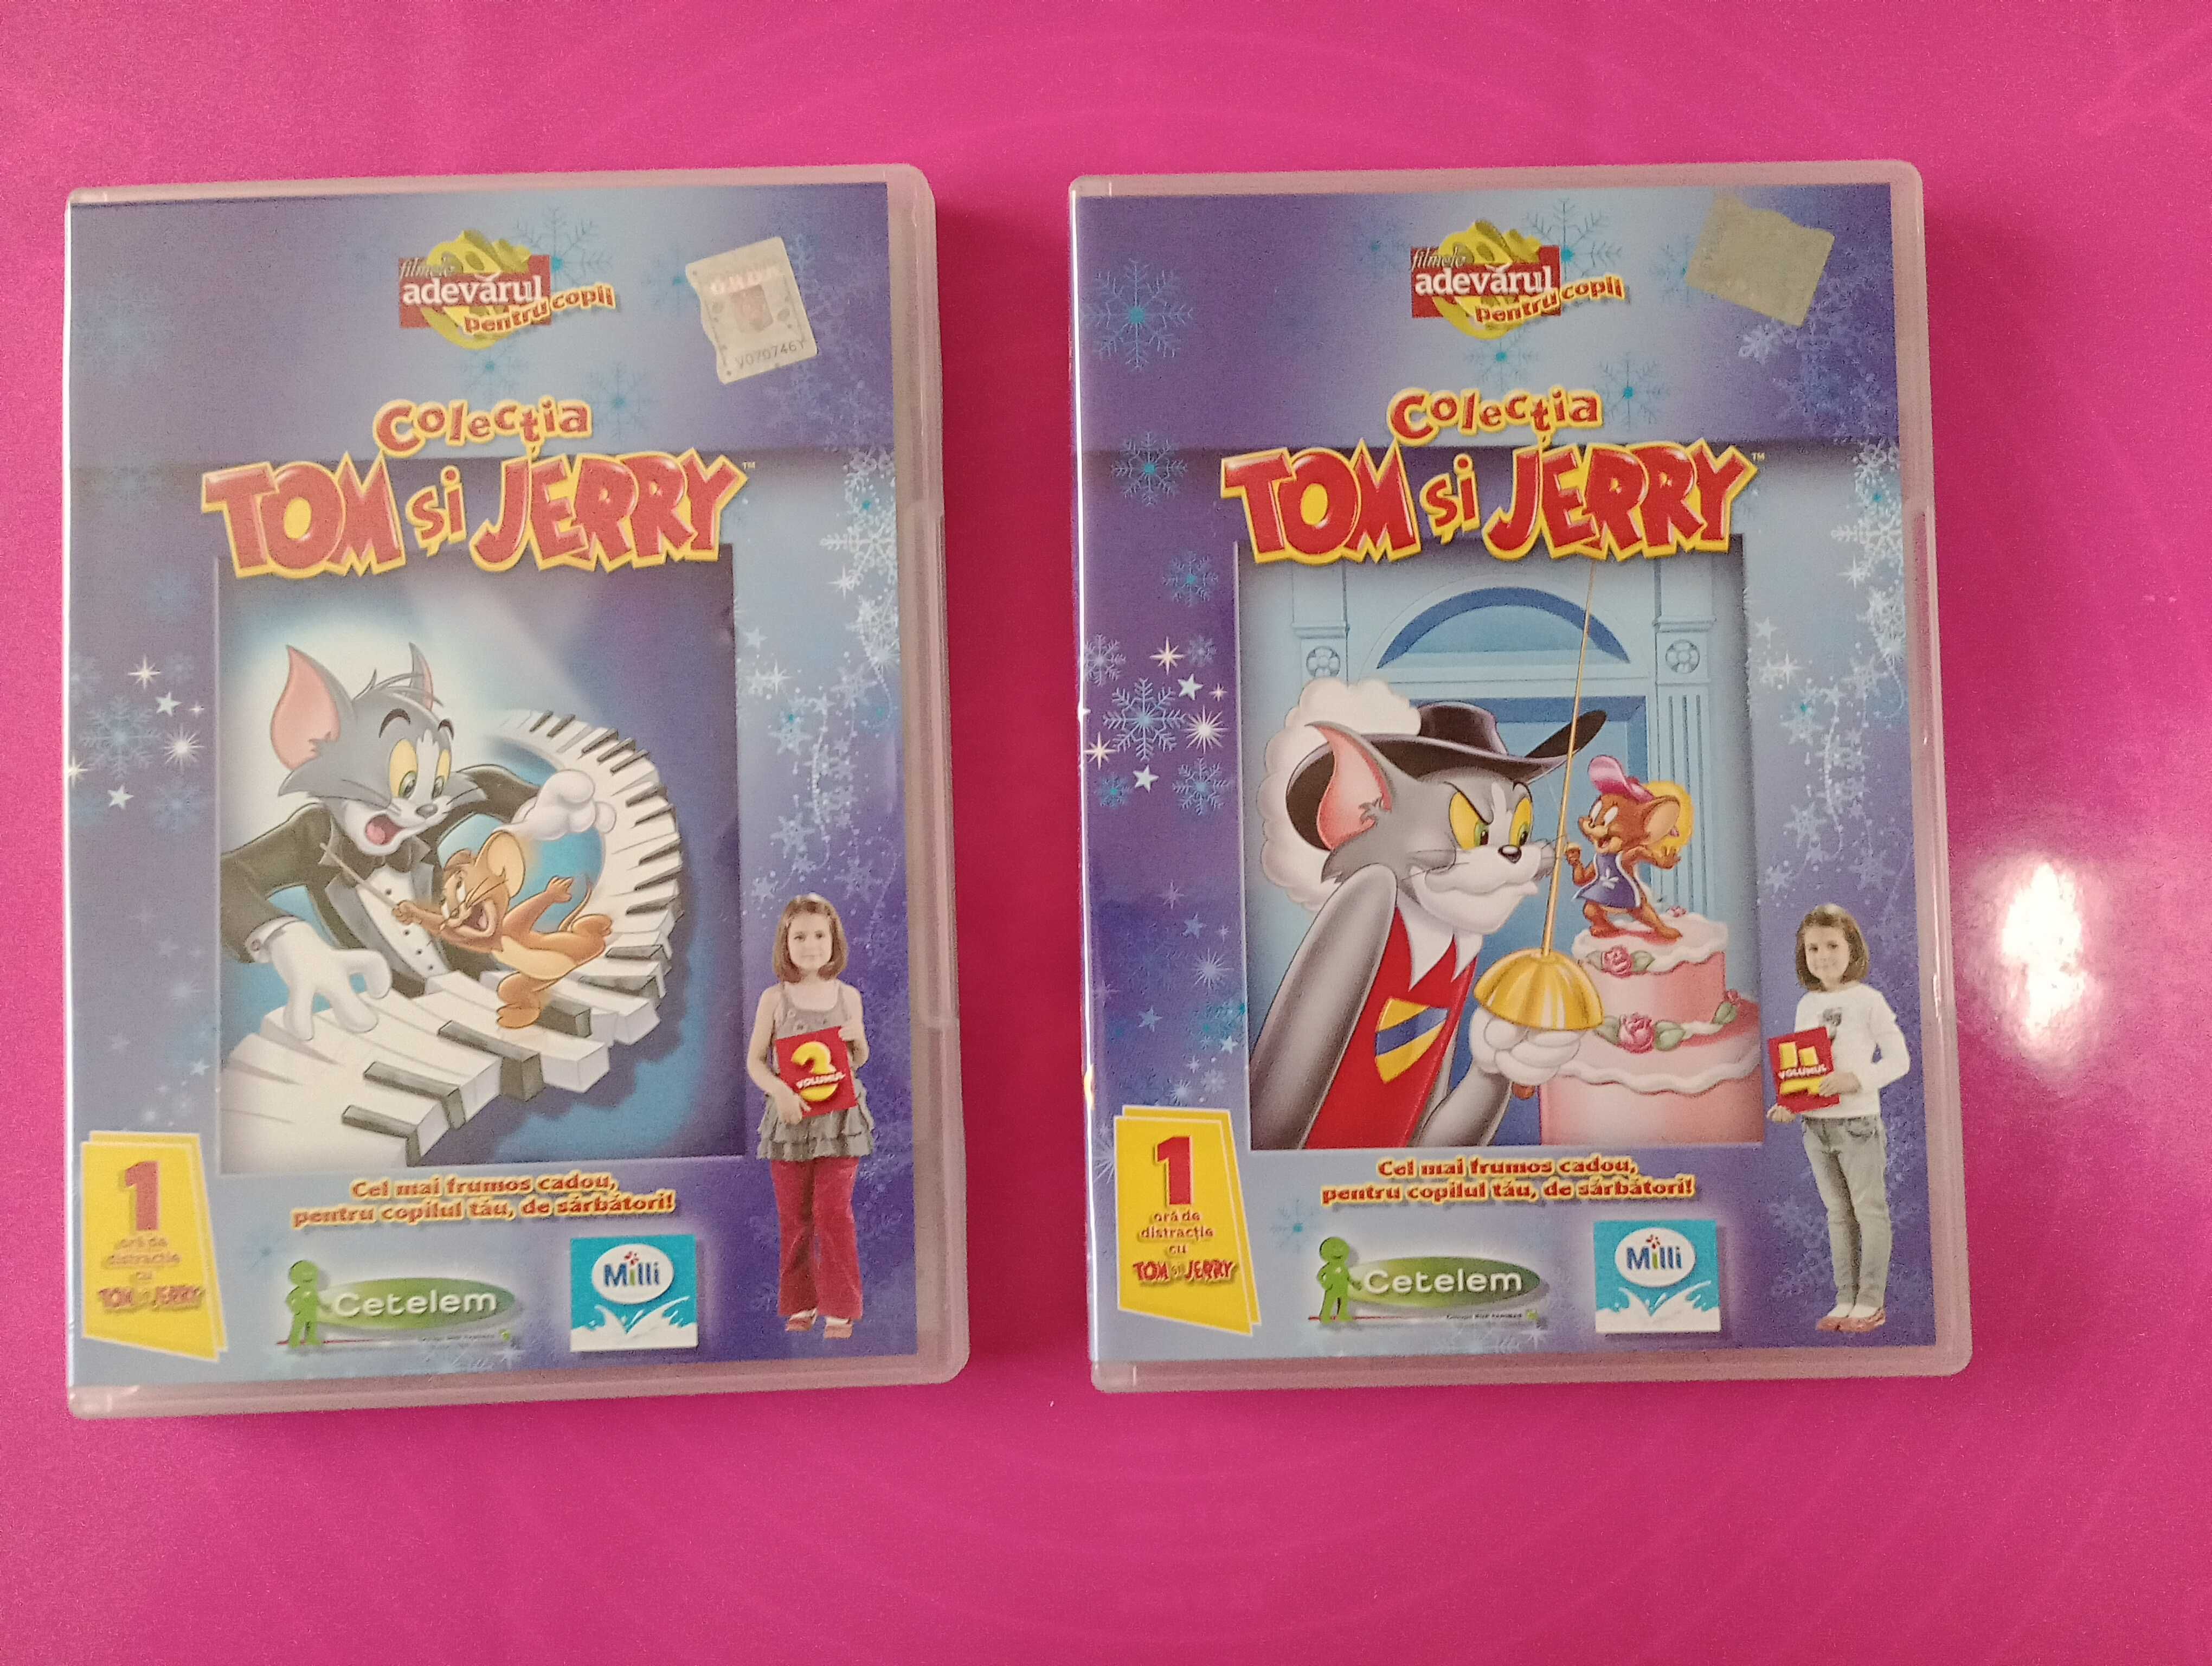 Colectia Tom & Jerry, desene animate pe opt DVD-uri.